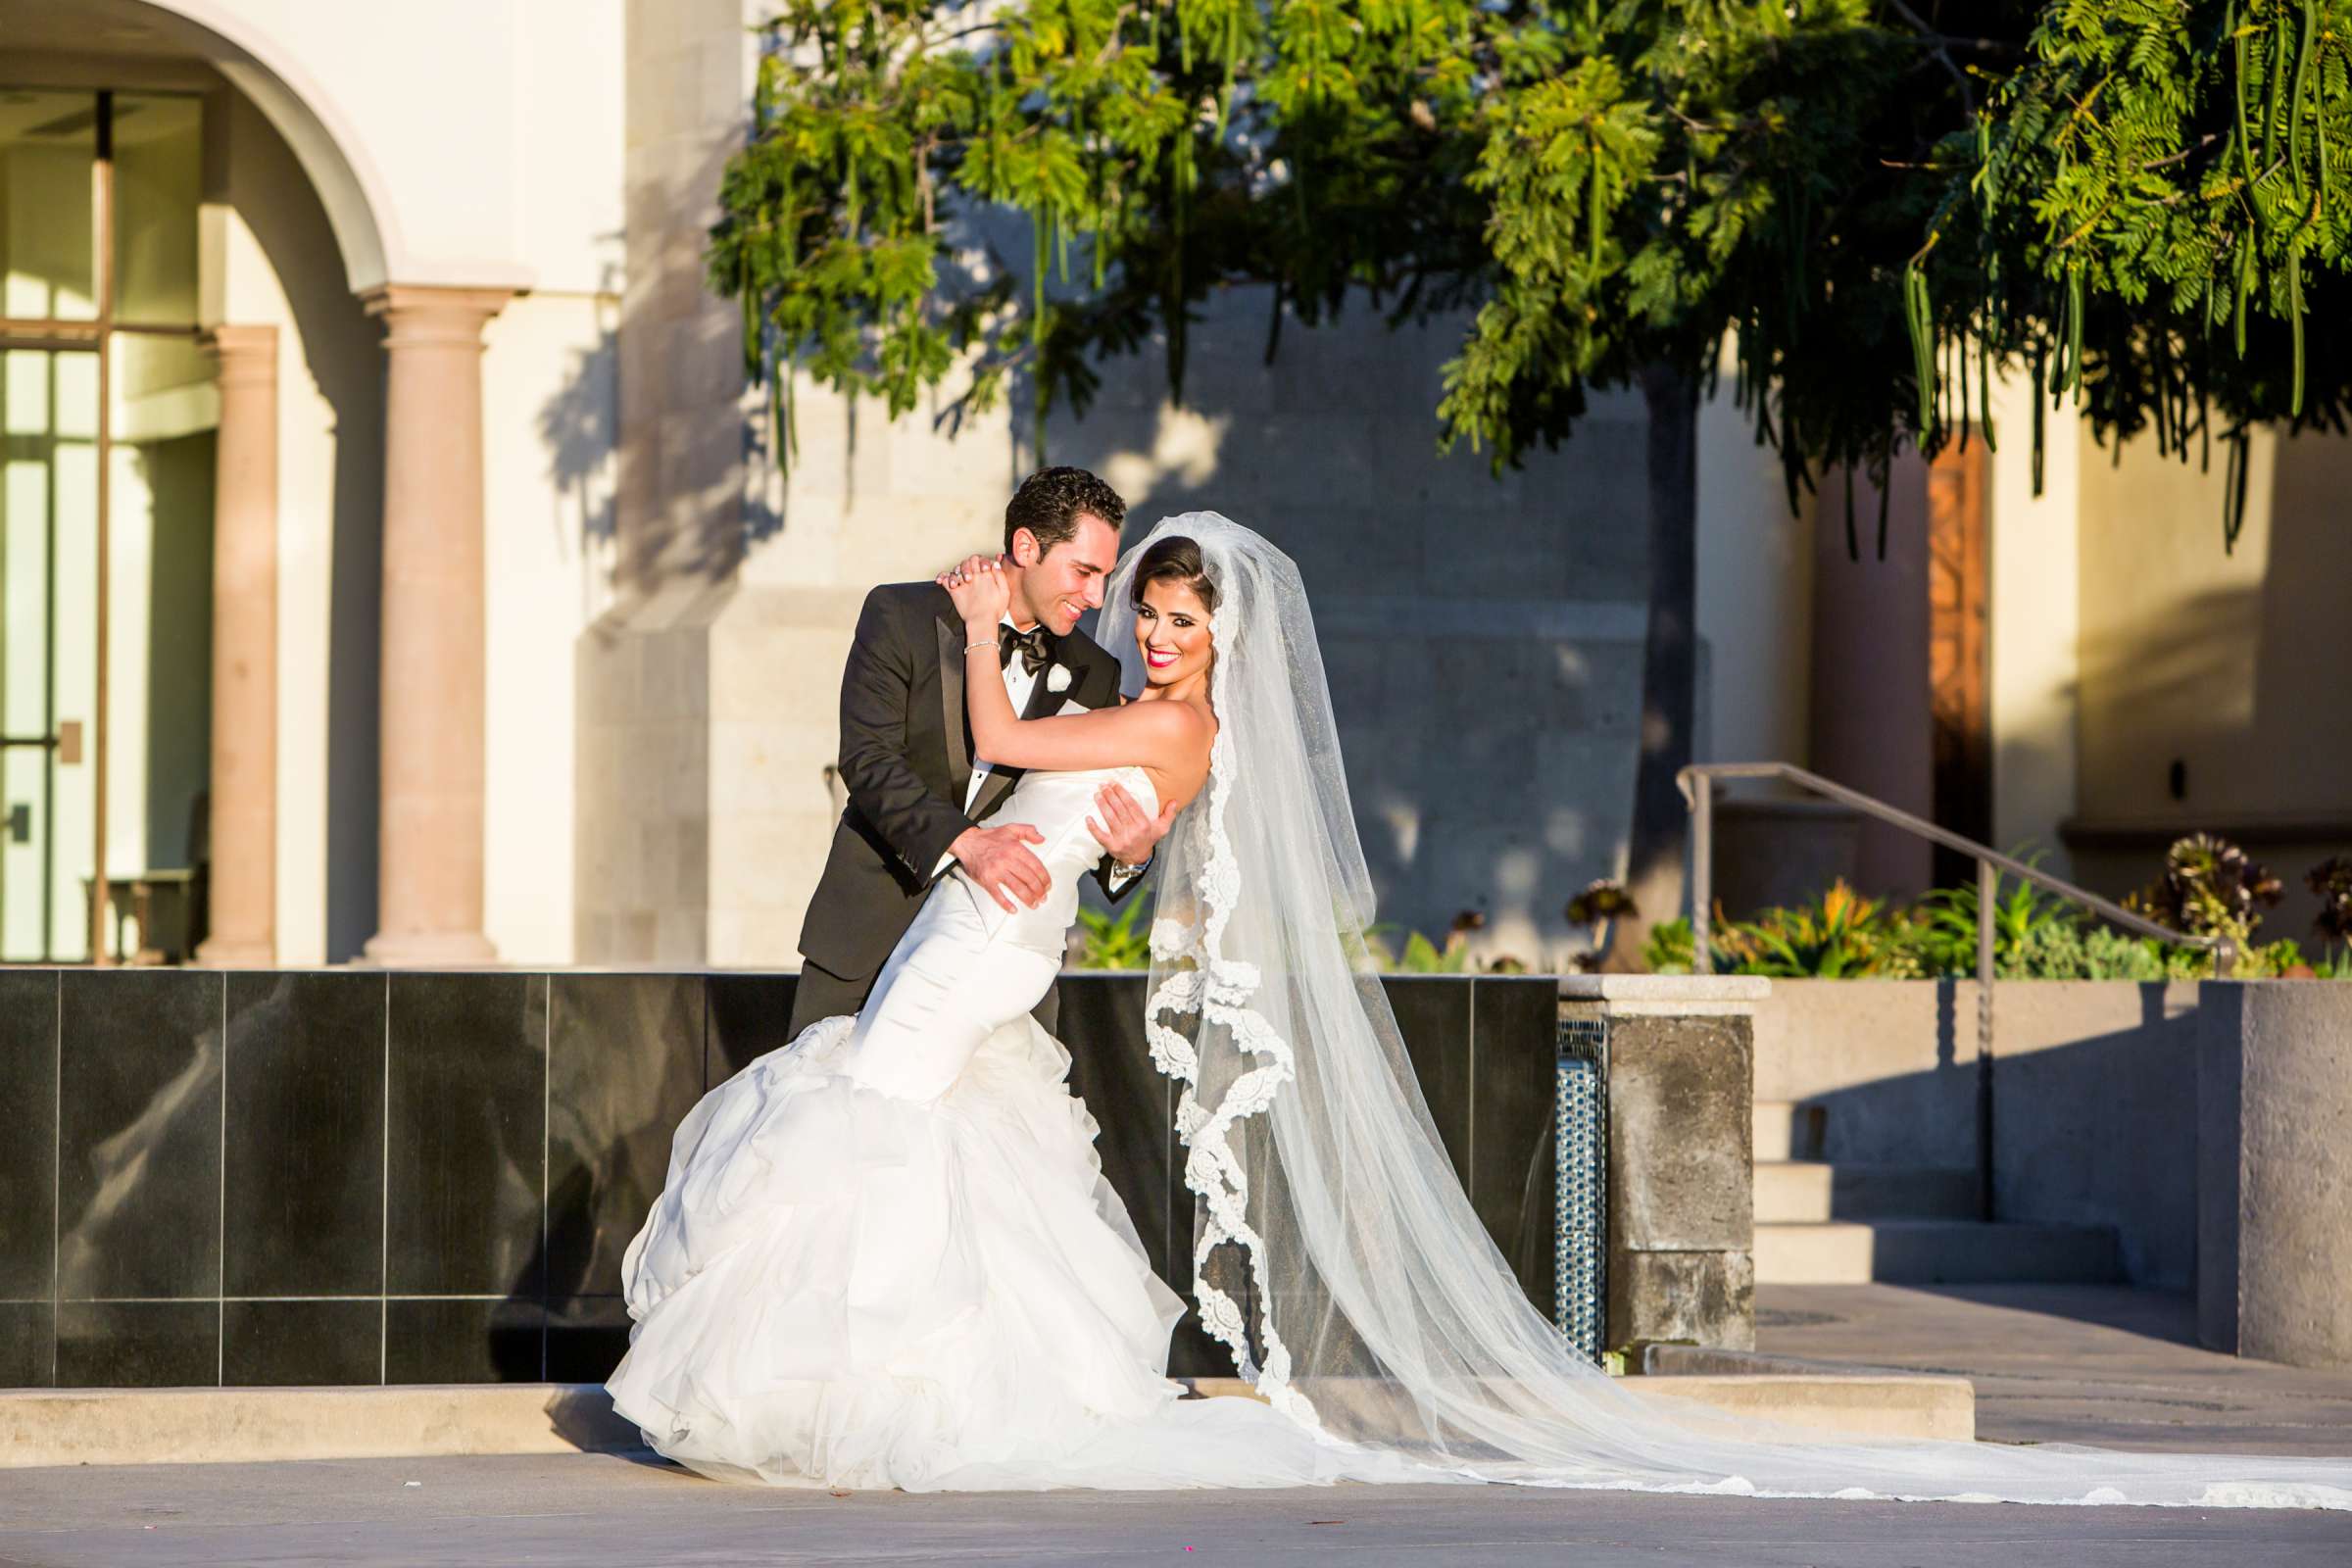 Classical moment at Hyatt Regency La Jolla Wedding, Kamar and Sean Wedding Photo #1 by True Photography